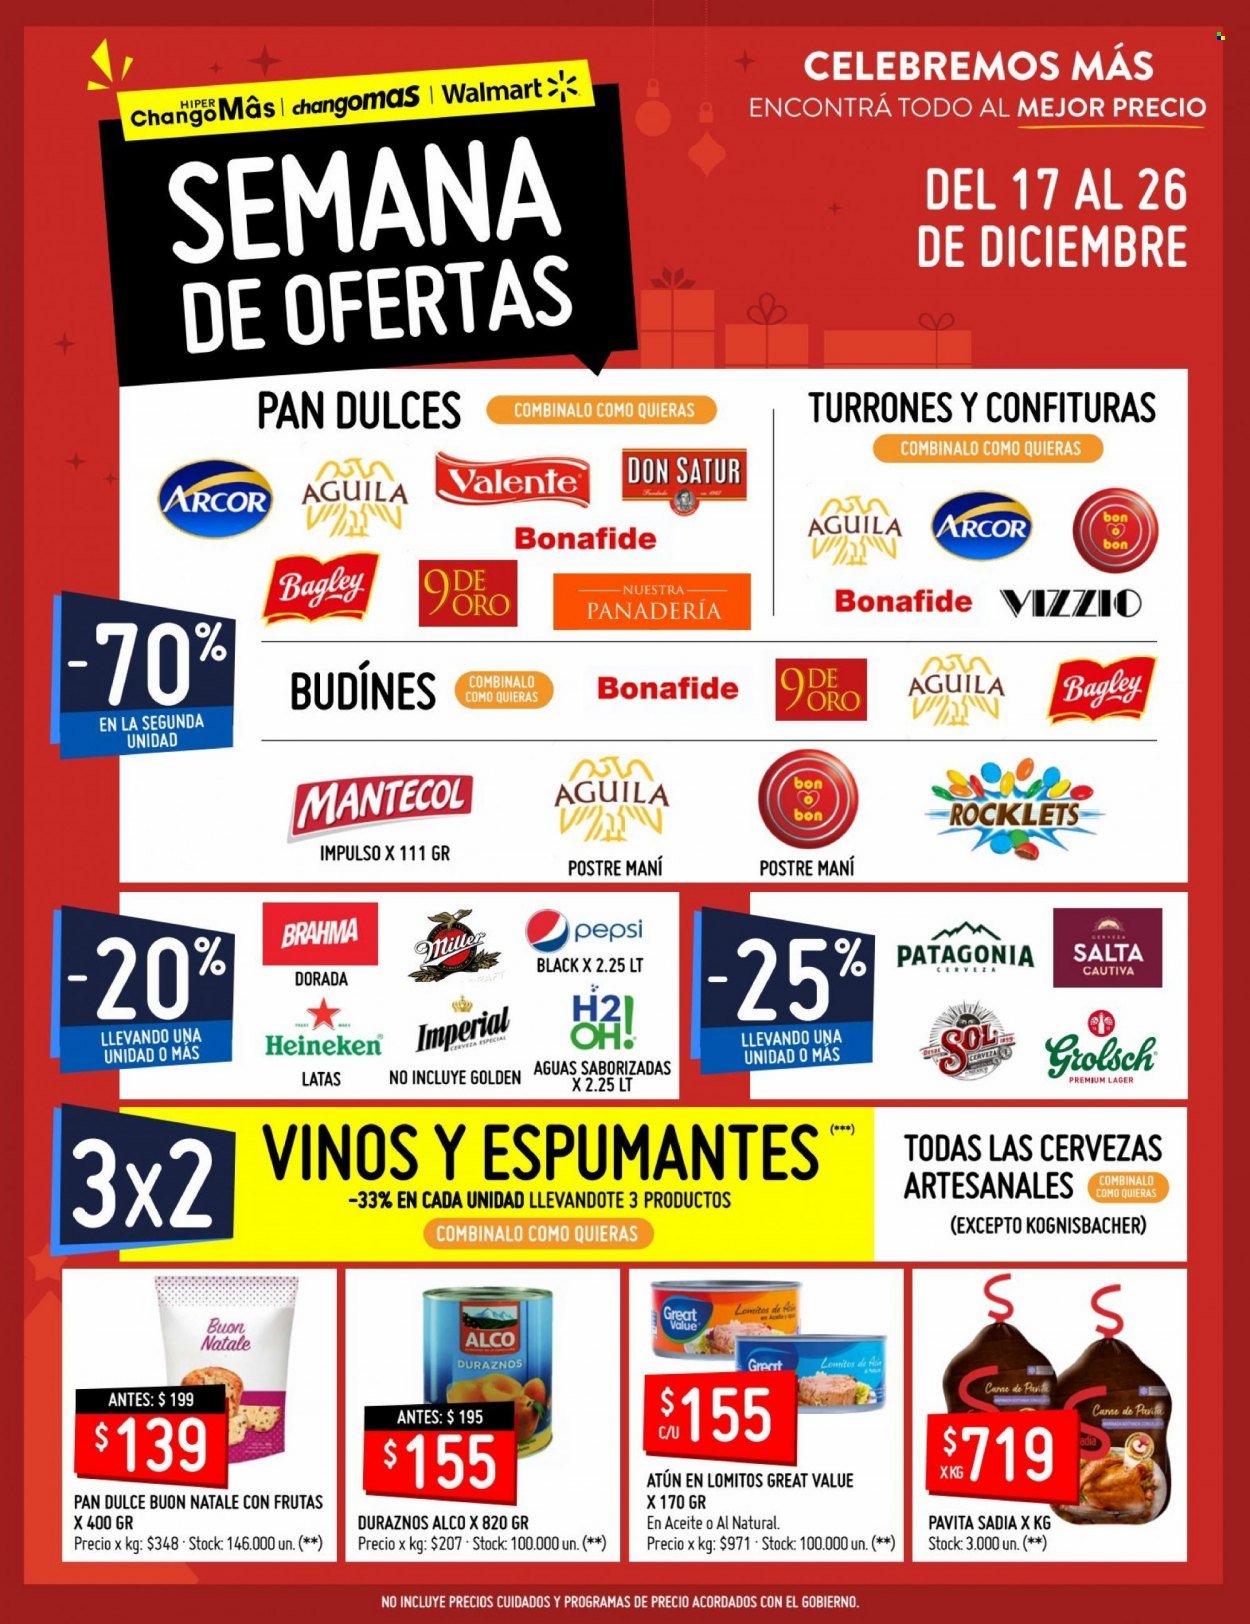 Folleto actual Changomas - 17/12/21 - 26/12/21 - Ventas - Heineken, Brahma, durazno, pan, pan dulce, Pepsi, lata. Página 1.